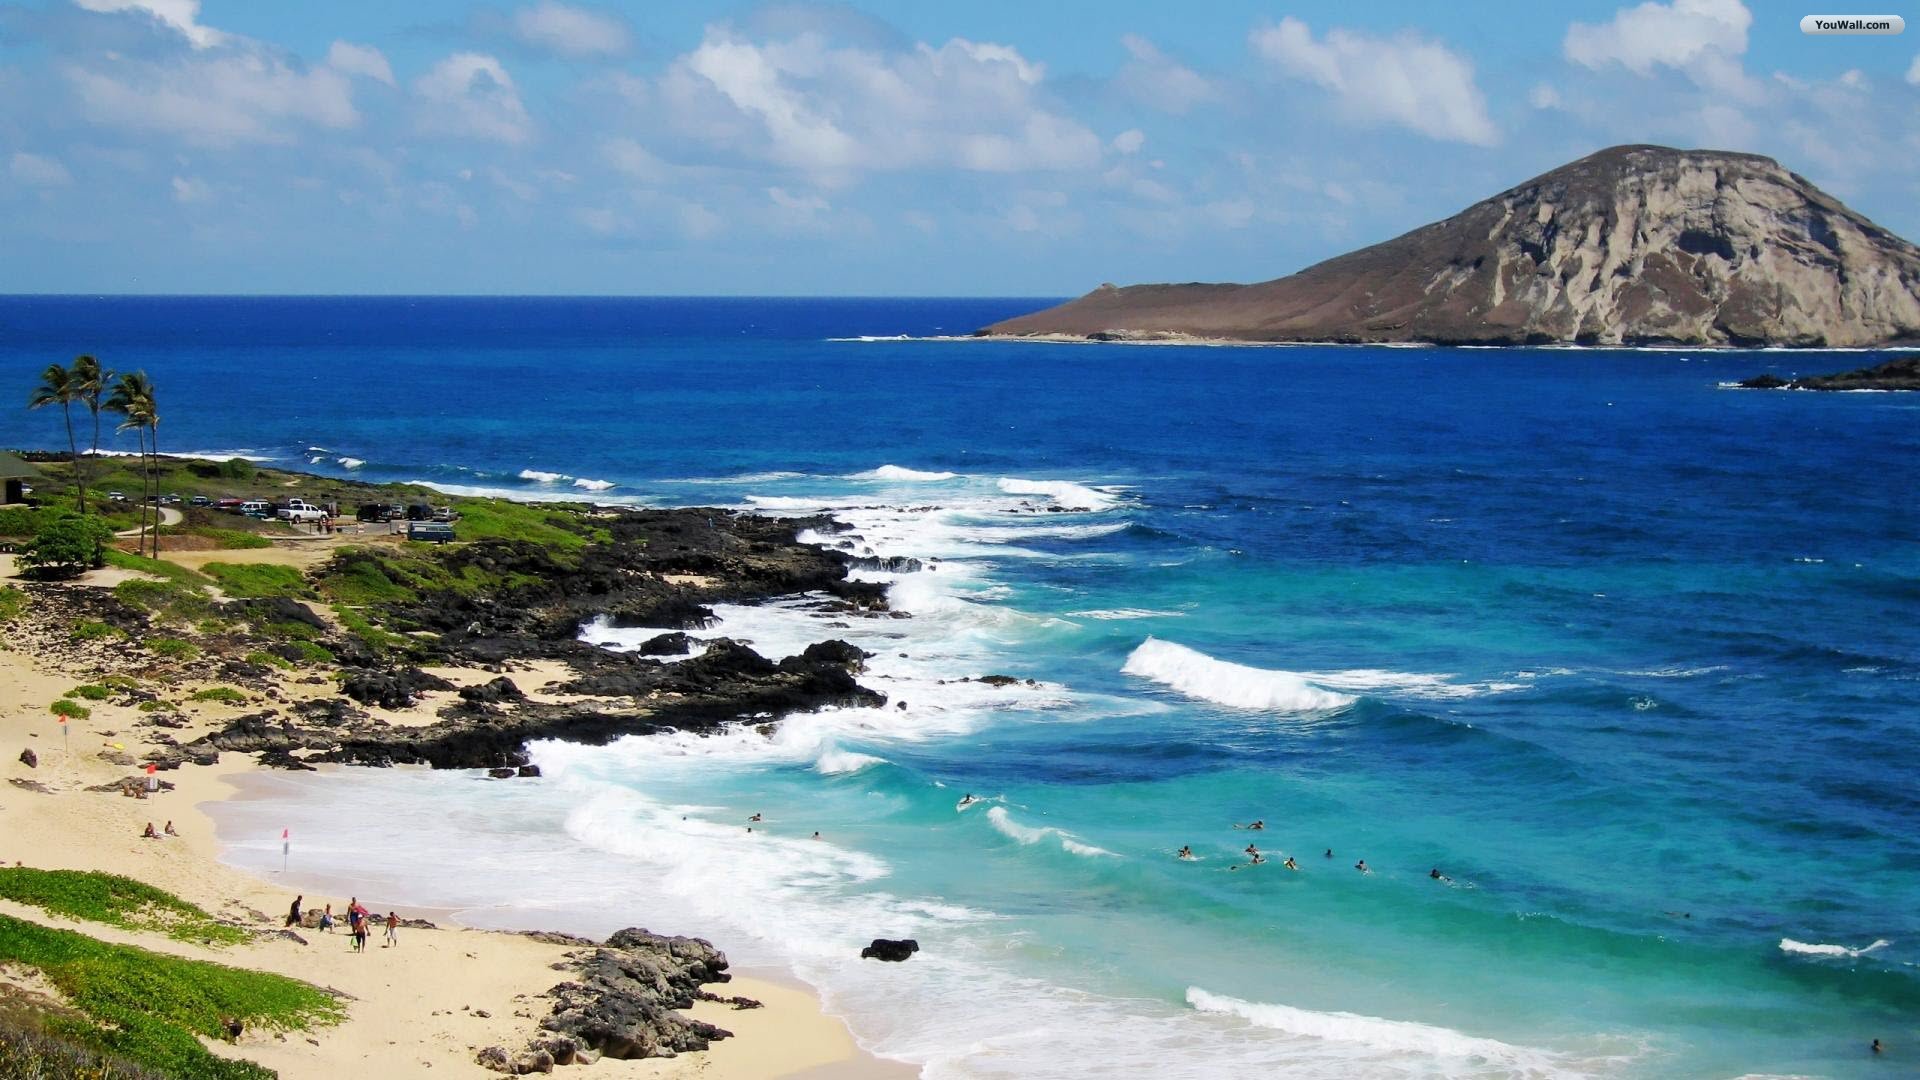 Hawaii Beaches Wallpaper Desktop Image